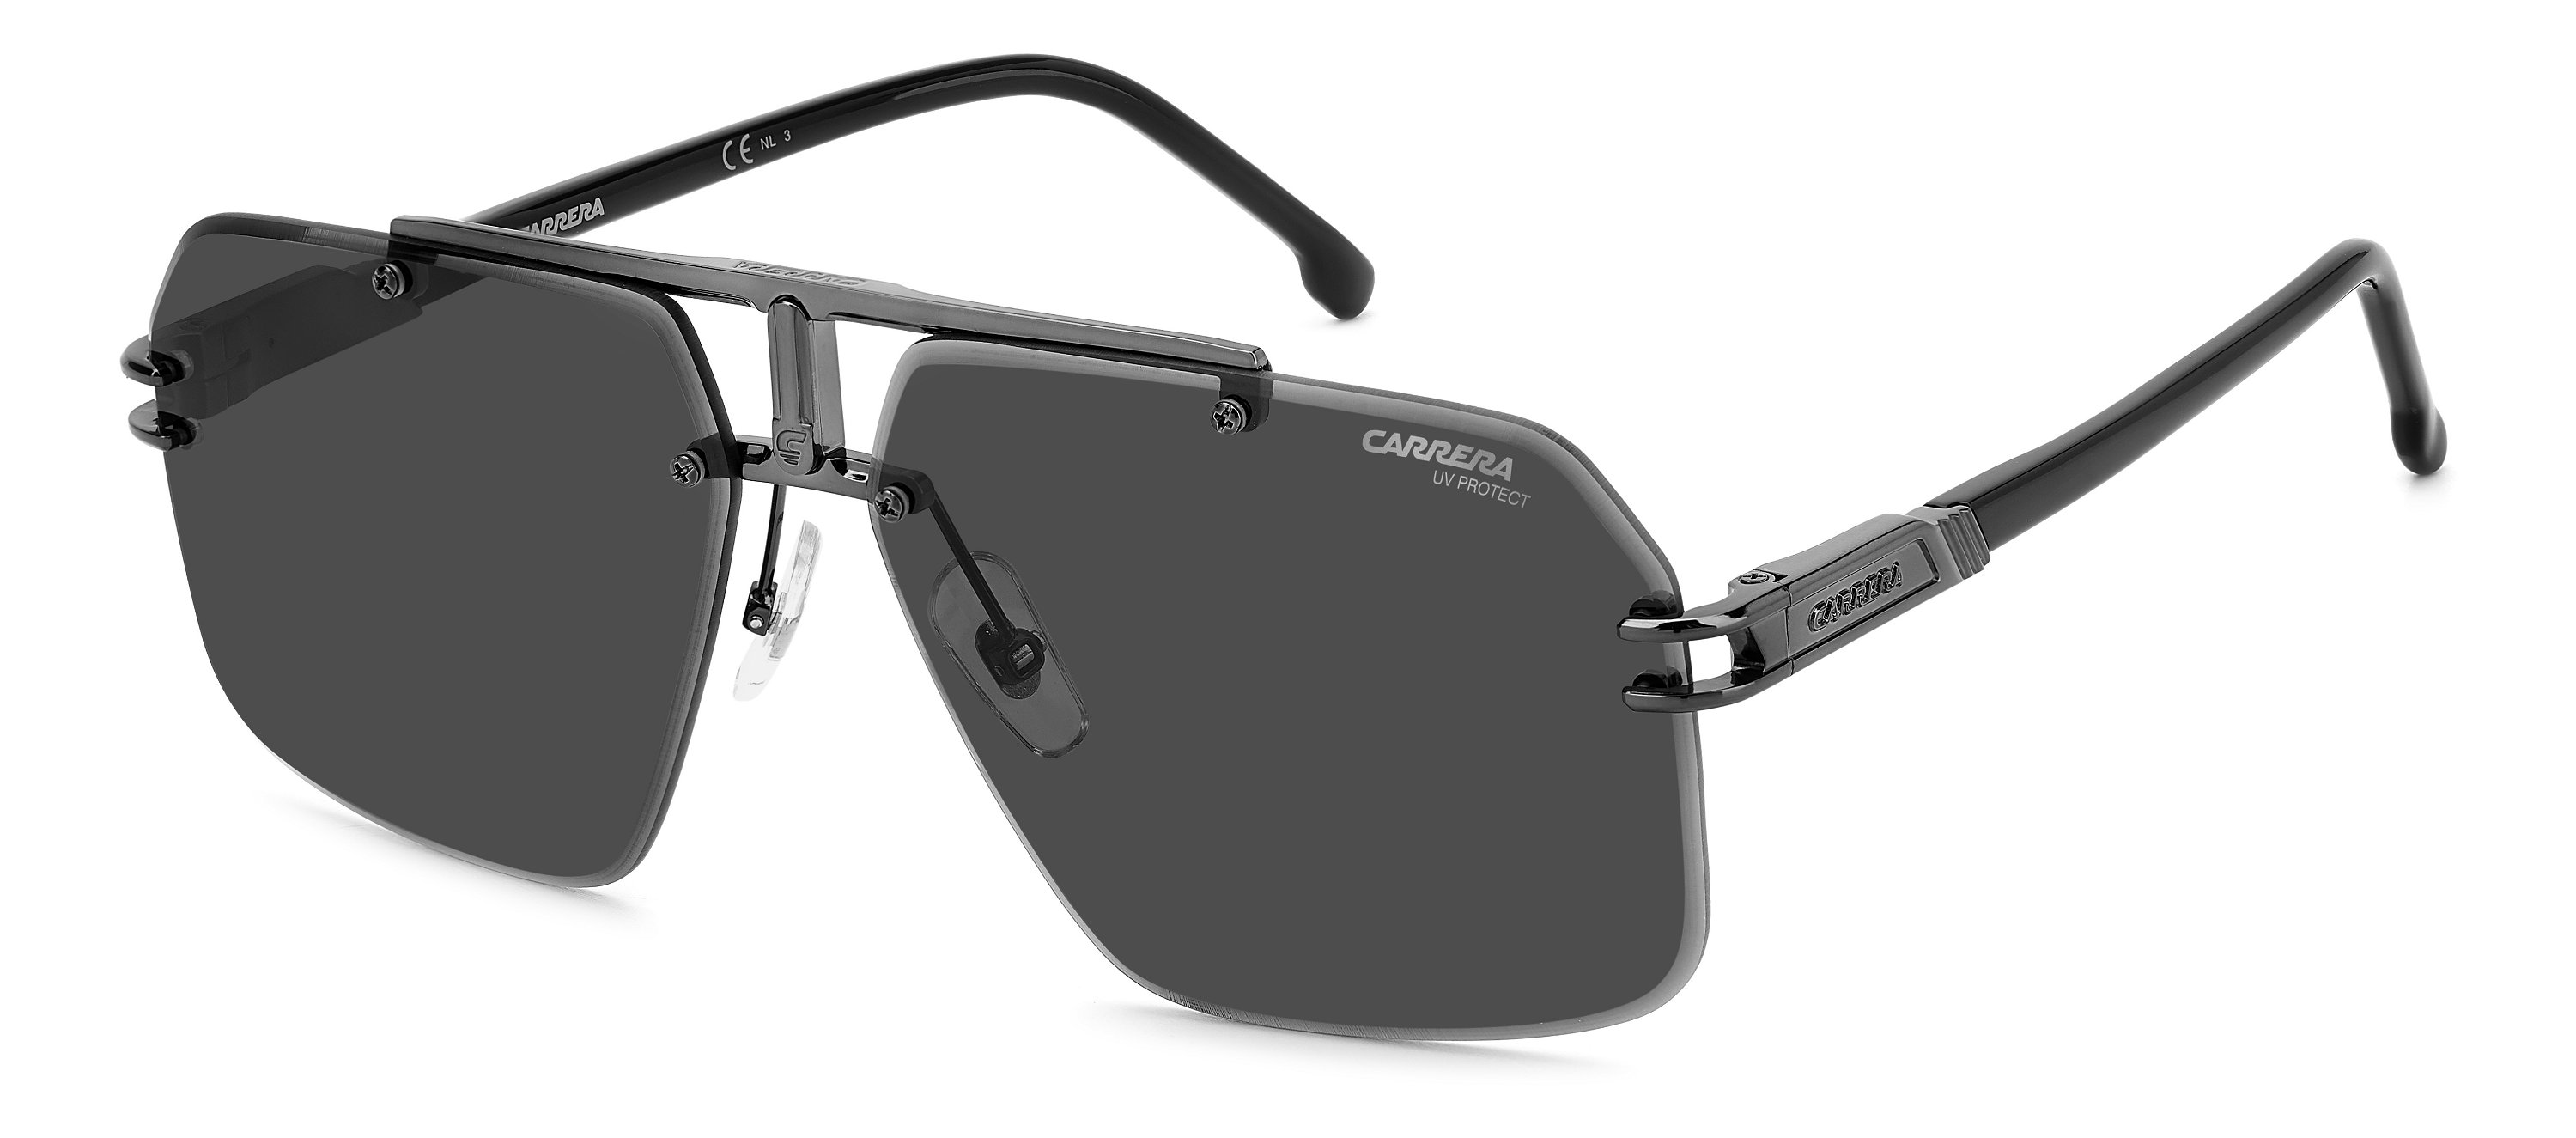 Carrera Sonnenbrille 1054/S V81 dunkelgrau schwarz